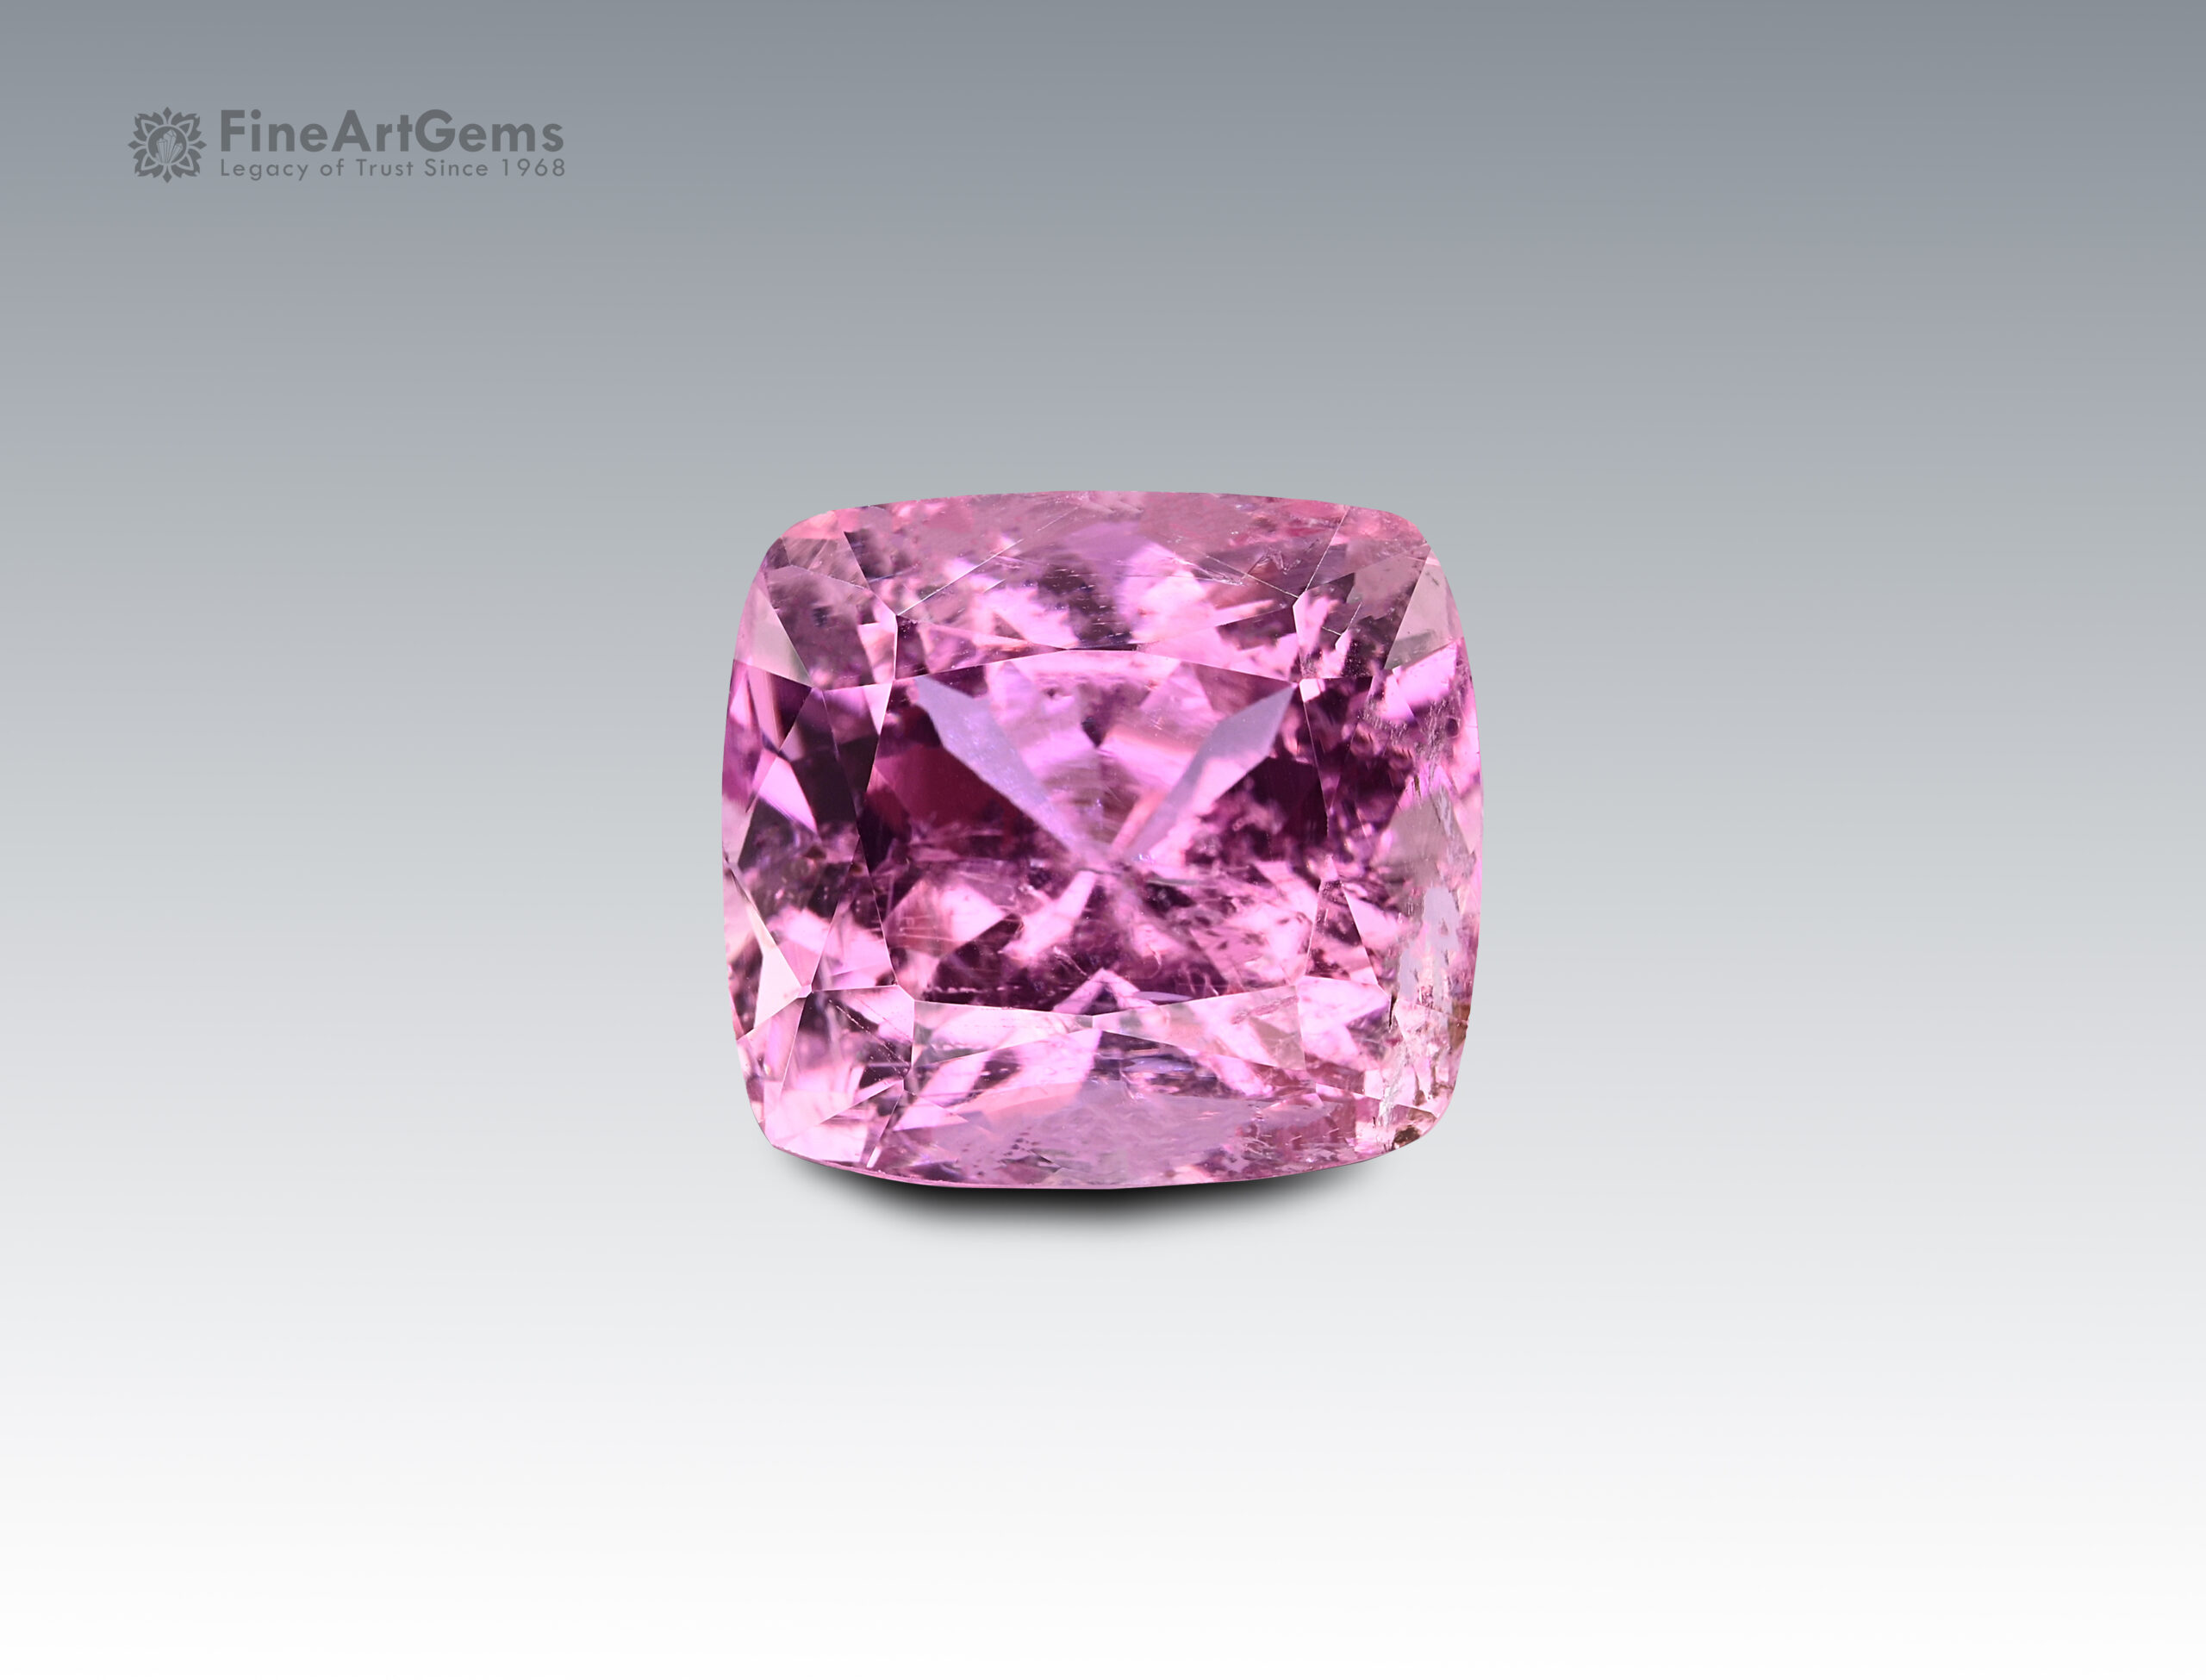 4.9 Carats Stunning Pink Topaz Natural Gemstone from Pakistan